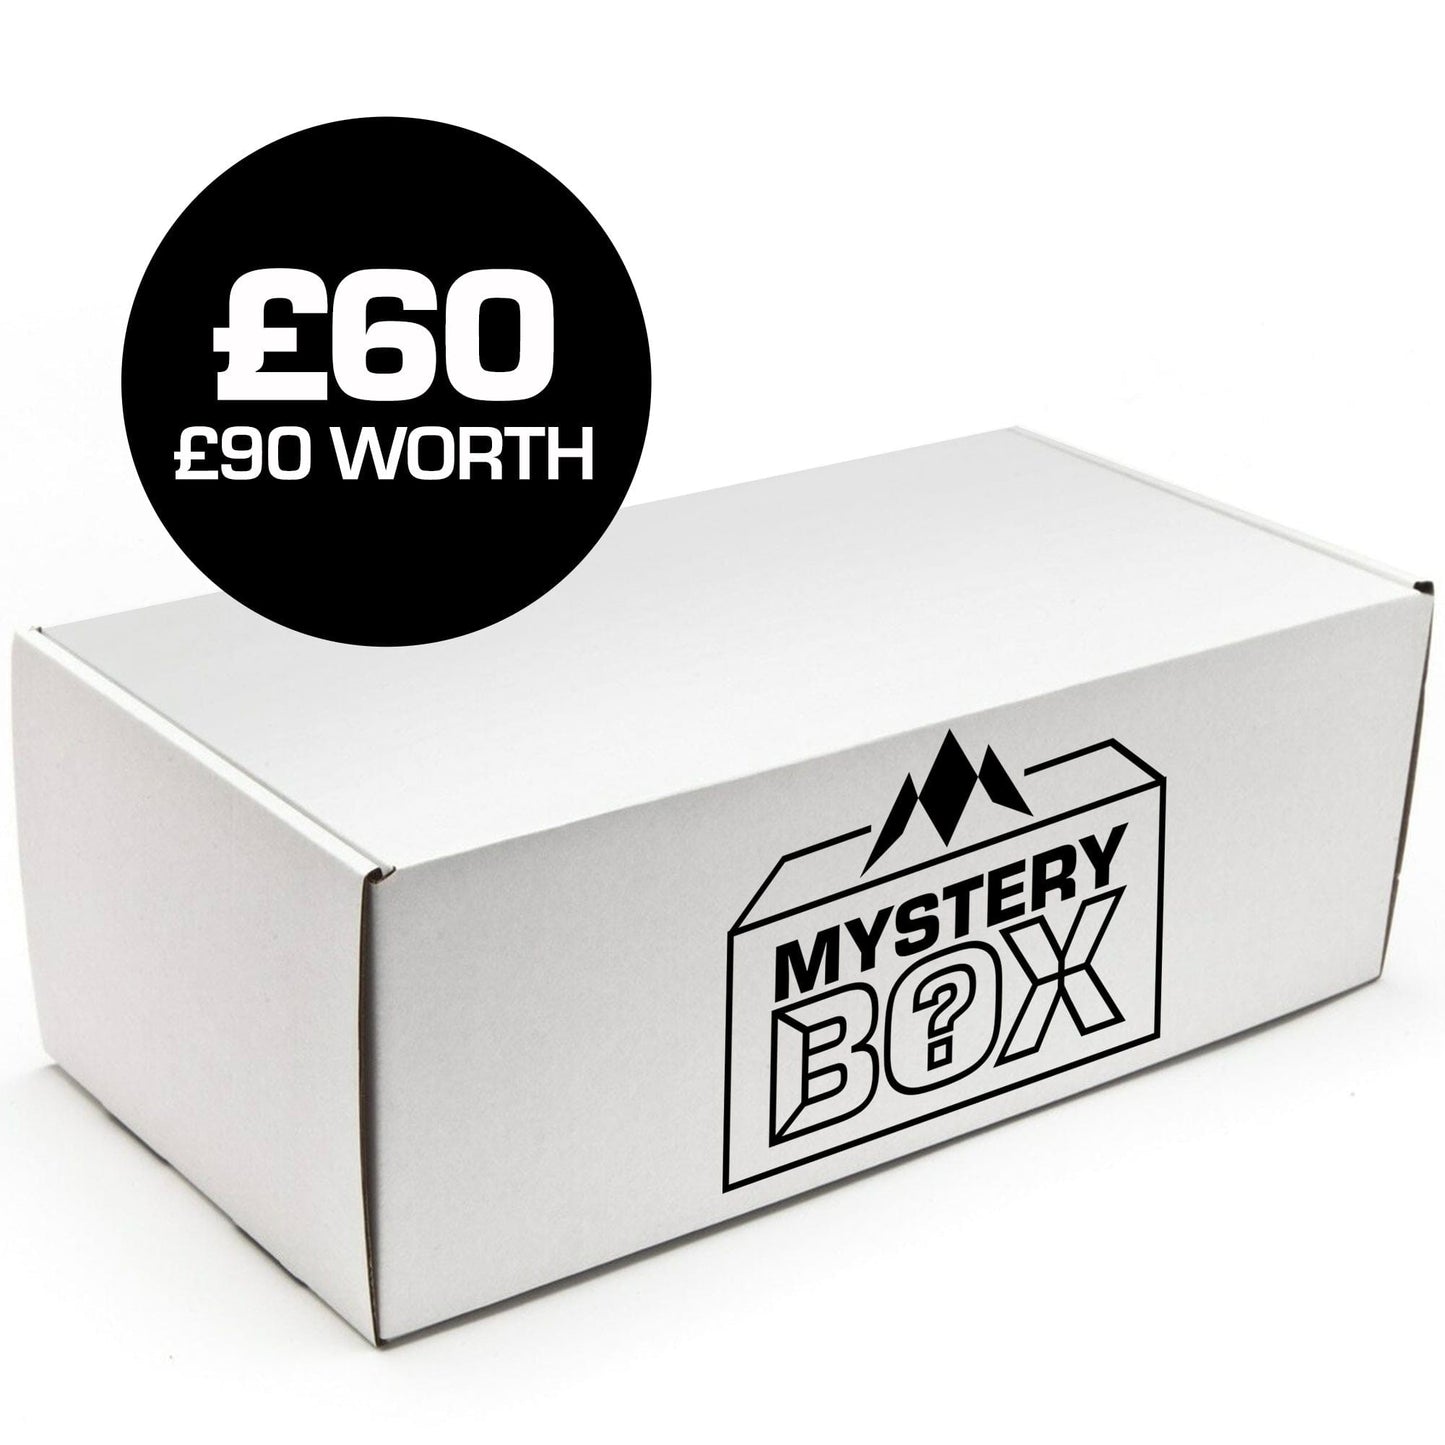 Mission Mystery Box - Darts & Accessories - Worth £90